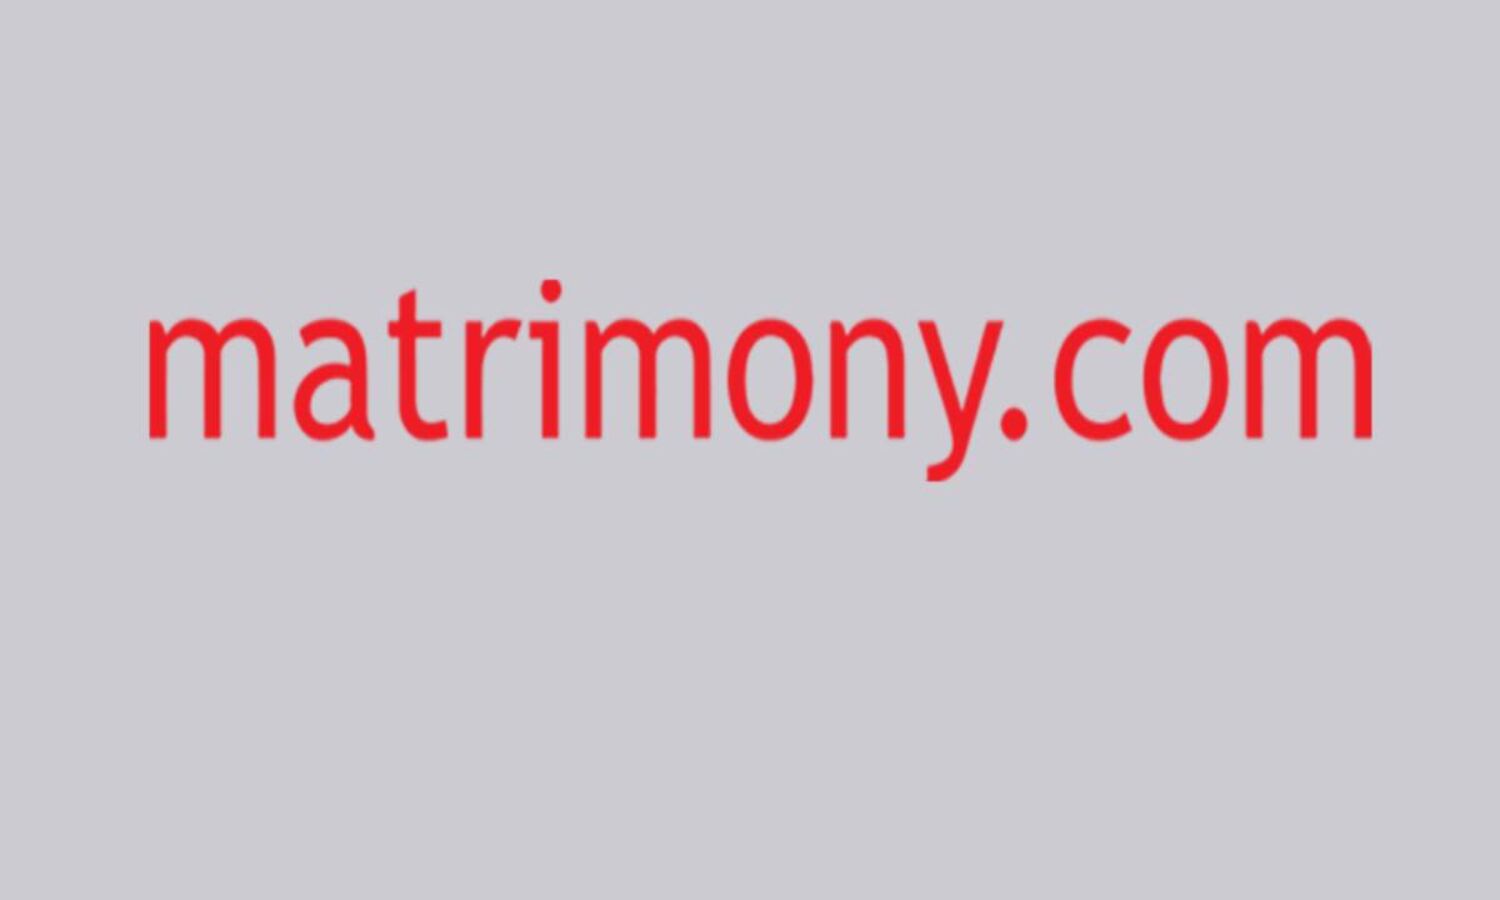 Matrimony.com Careers